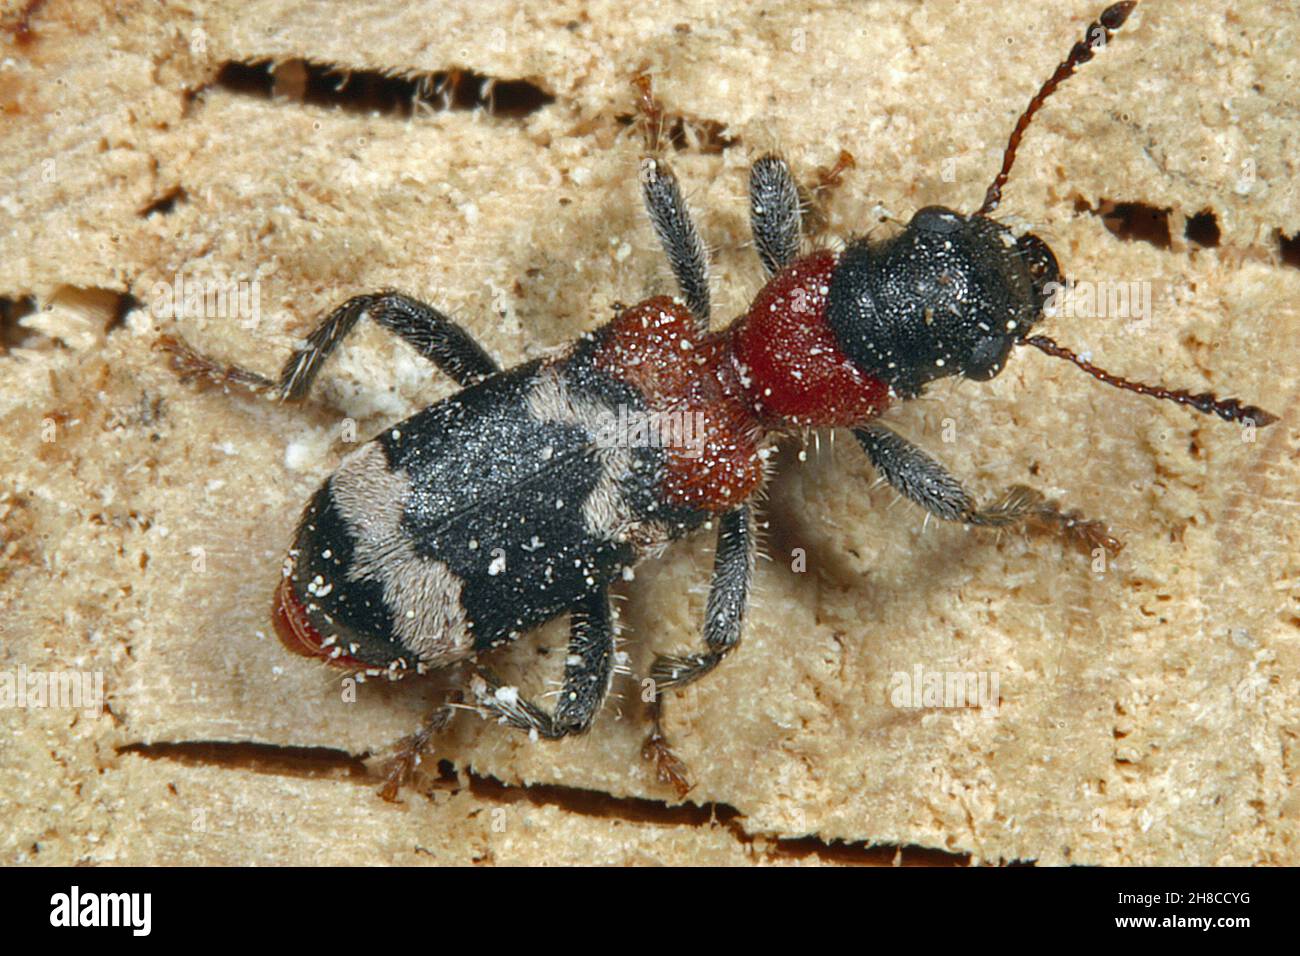 Ant beetle, European Red-bellied Clerid (Thanasimus formicarius), sitting on wood, Germany Stock Photo